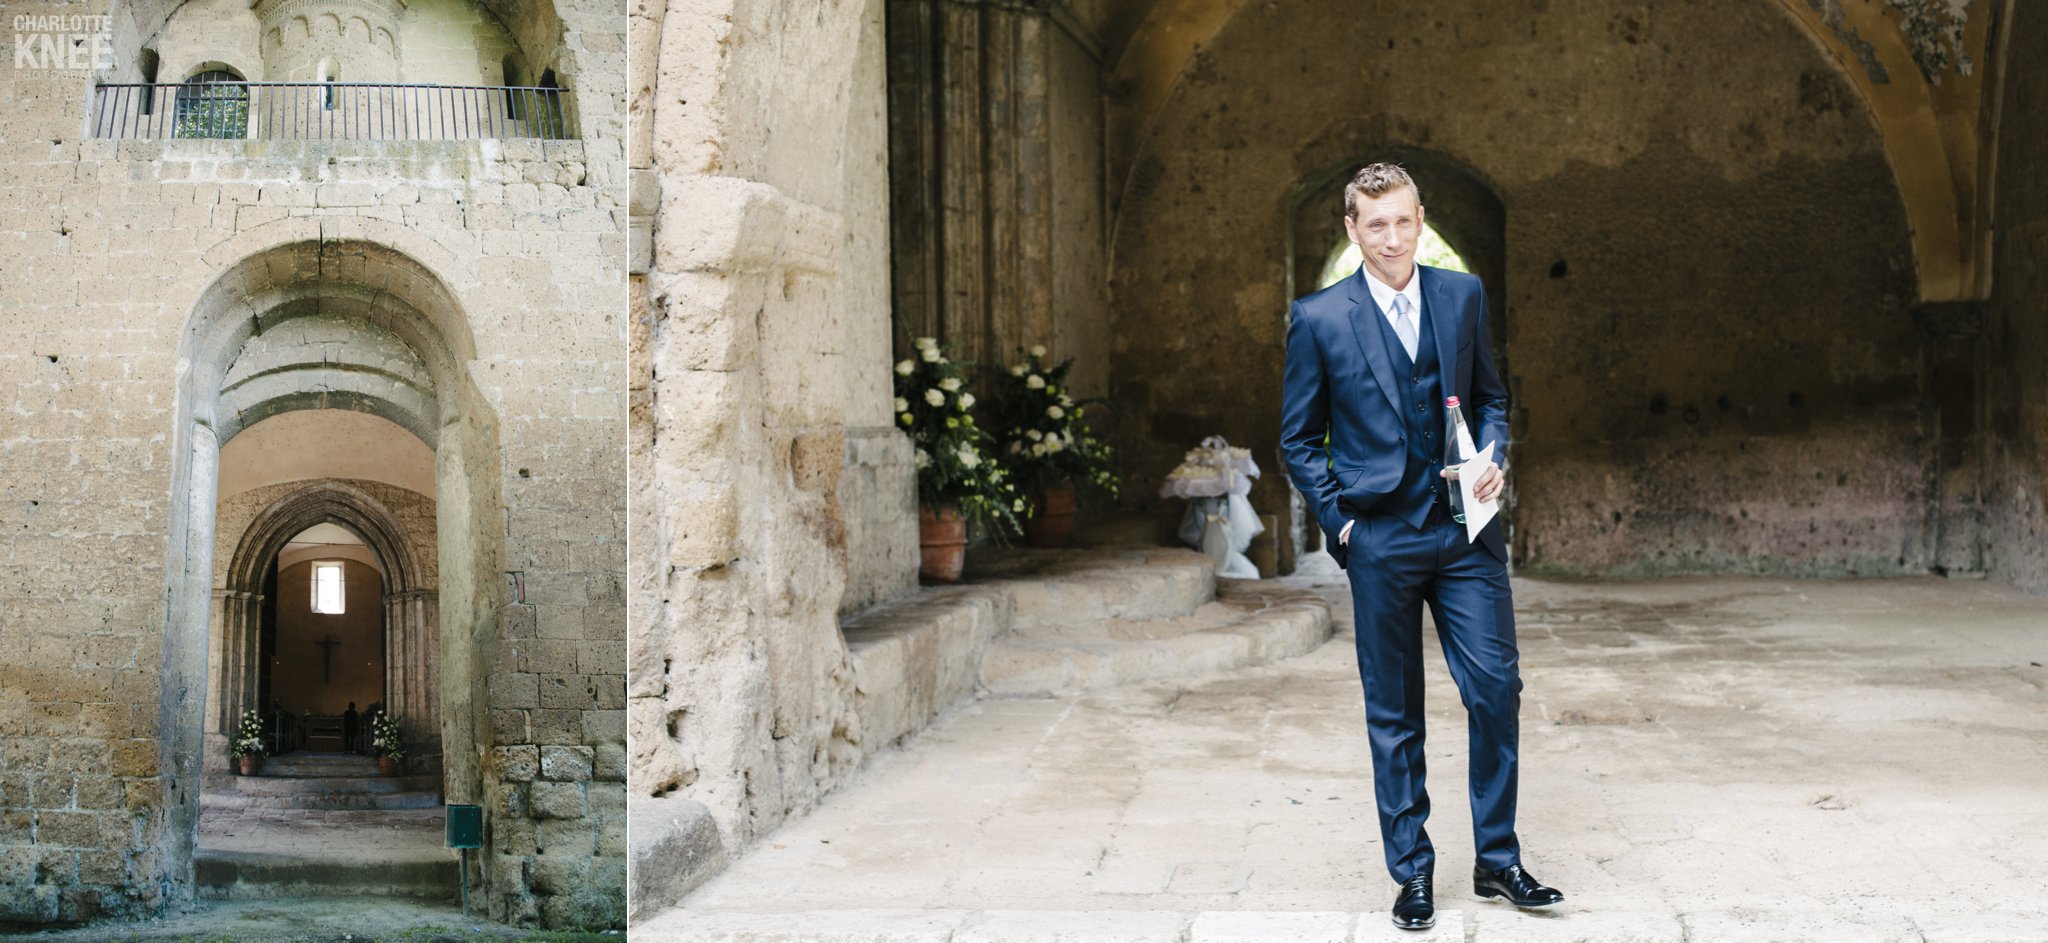 Destination-Wedding-La-Badia-di-Orvieto-Italy-Charlotte-Knee-Photography_0006.jpg